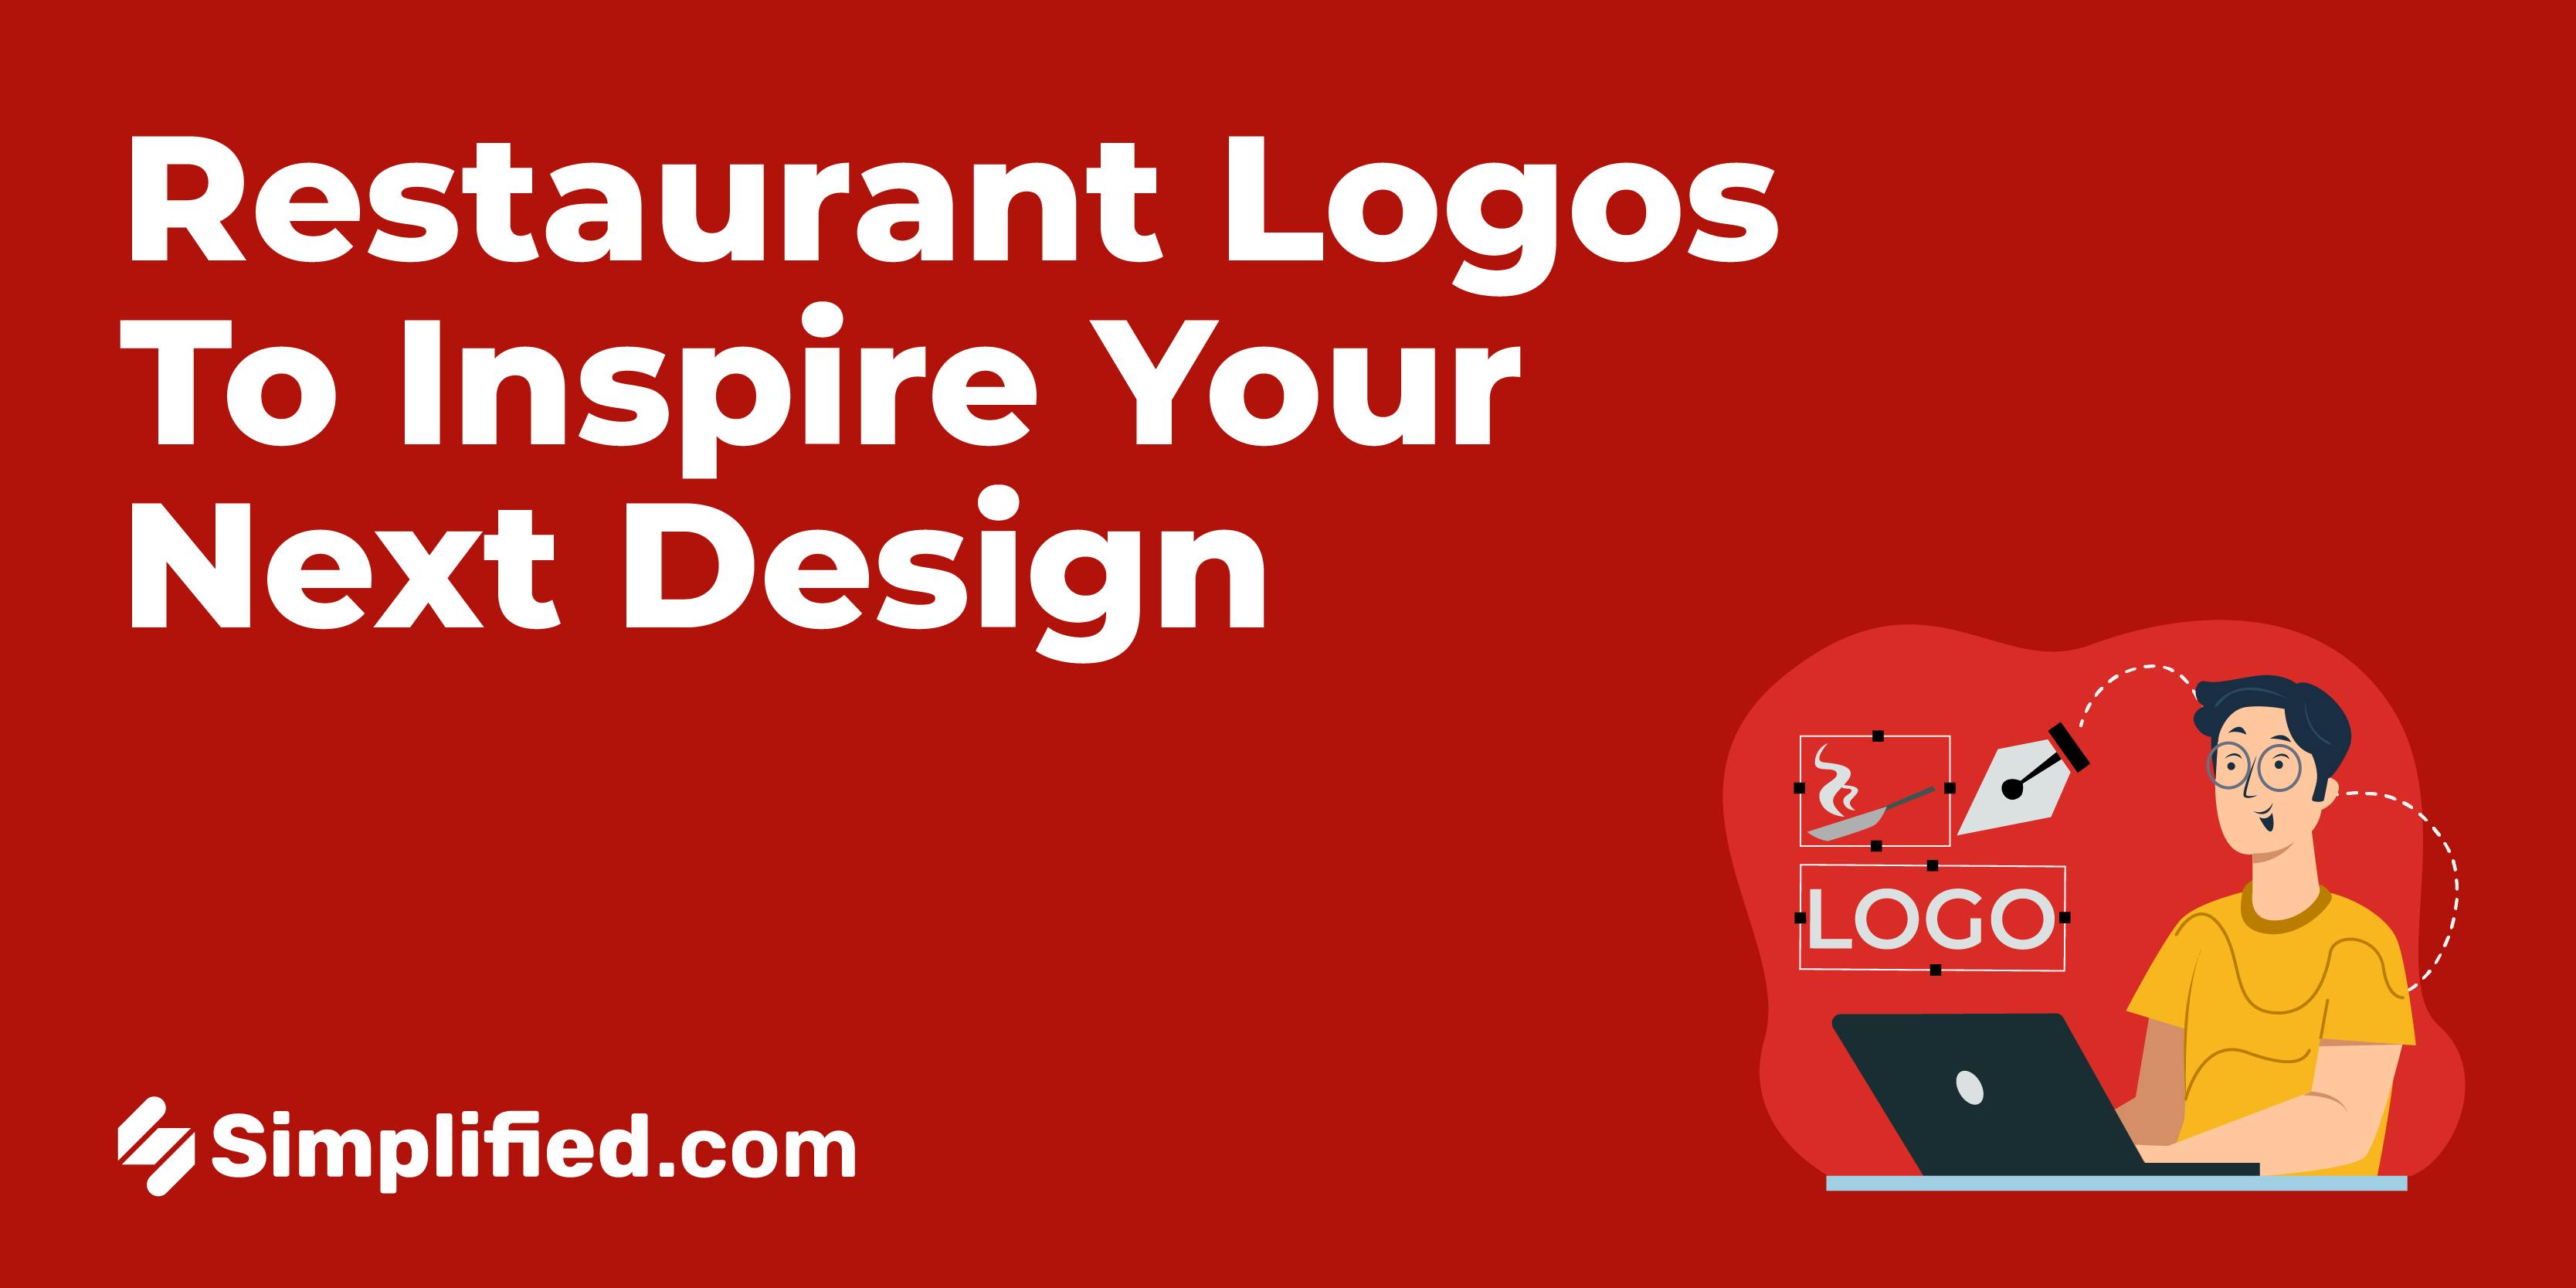 Logo Design: Fifteen golden rules for crafting logos